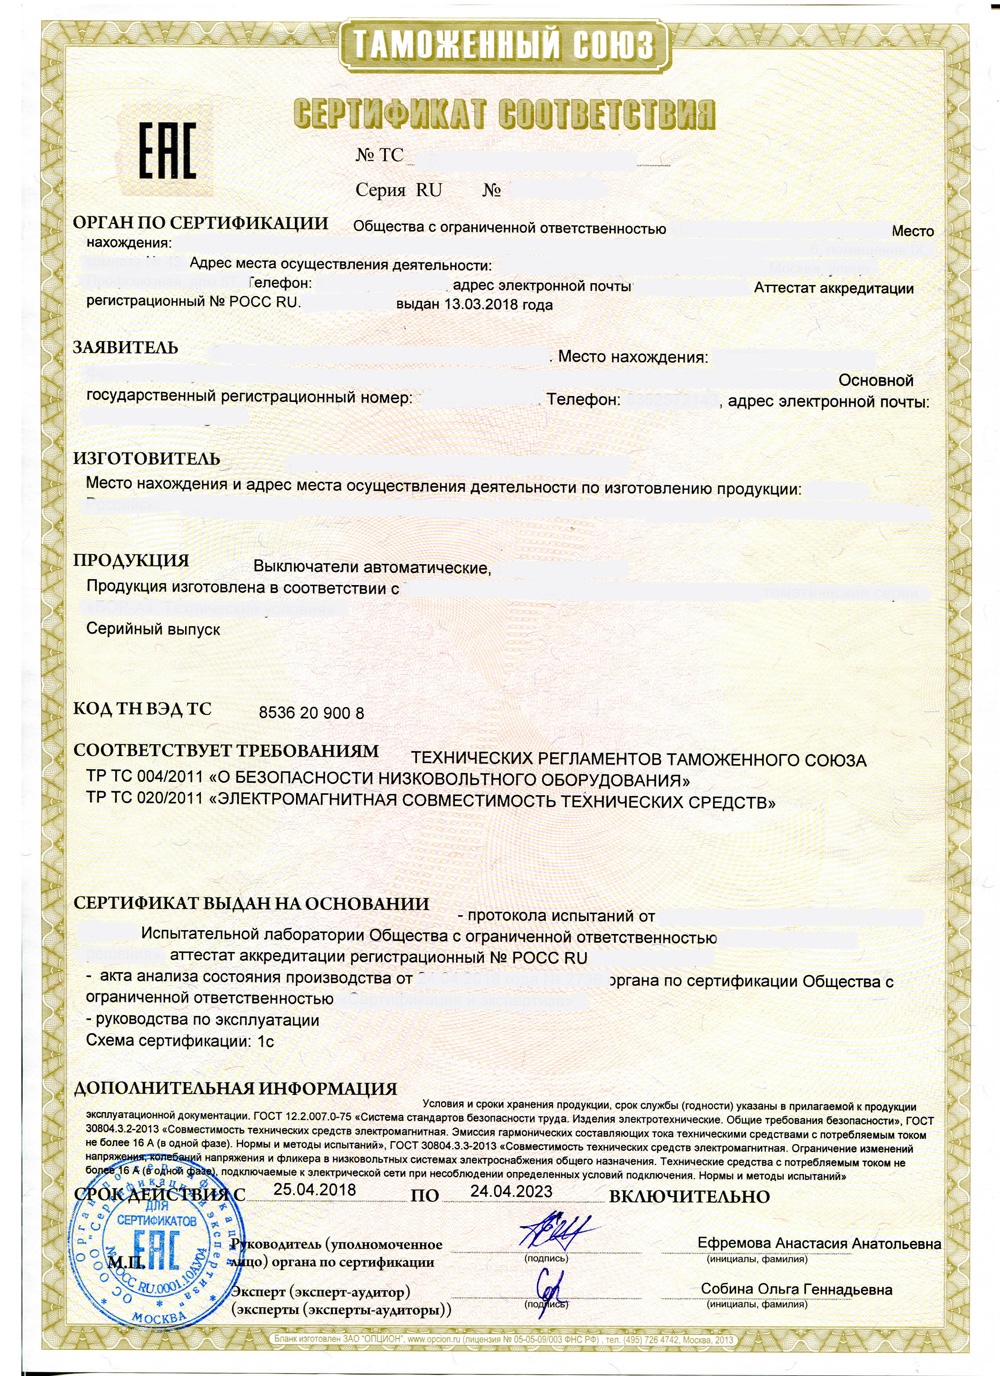 Certificado TR CU 004 020